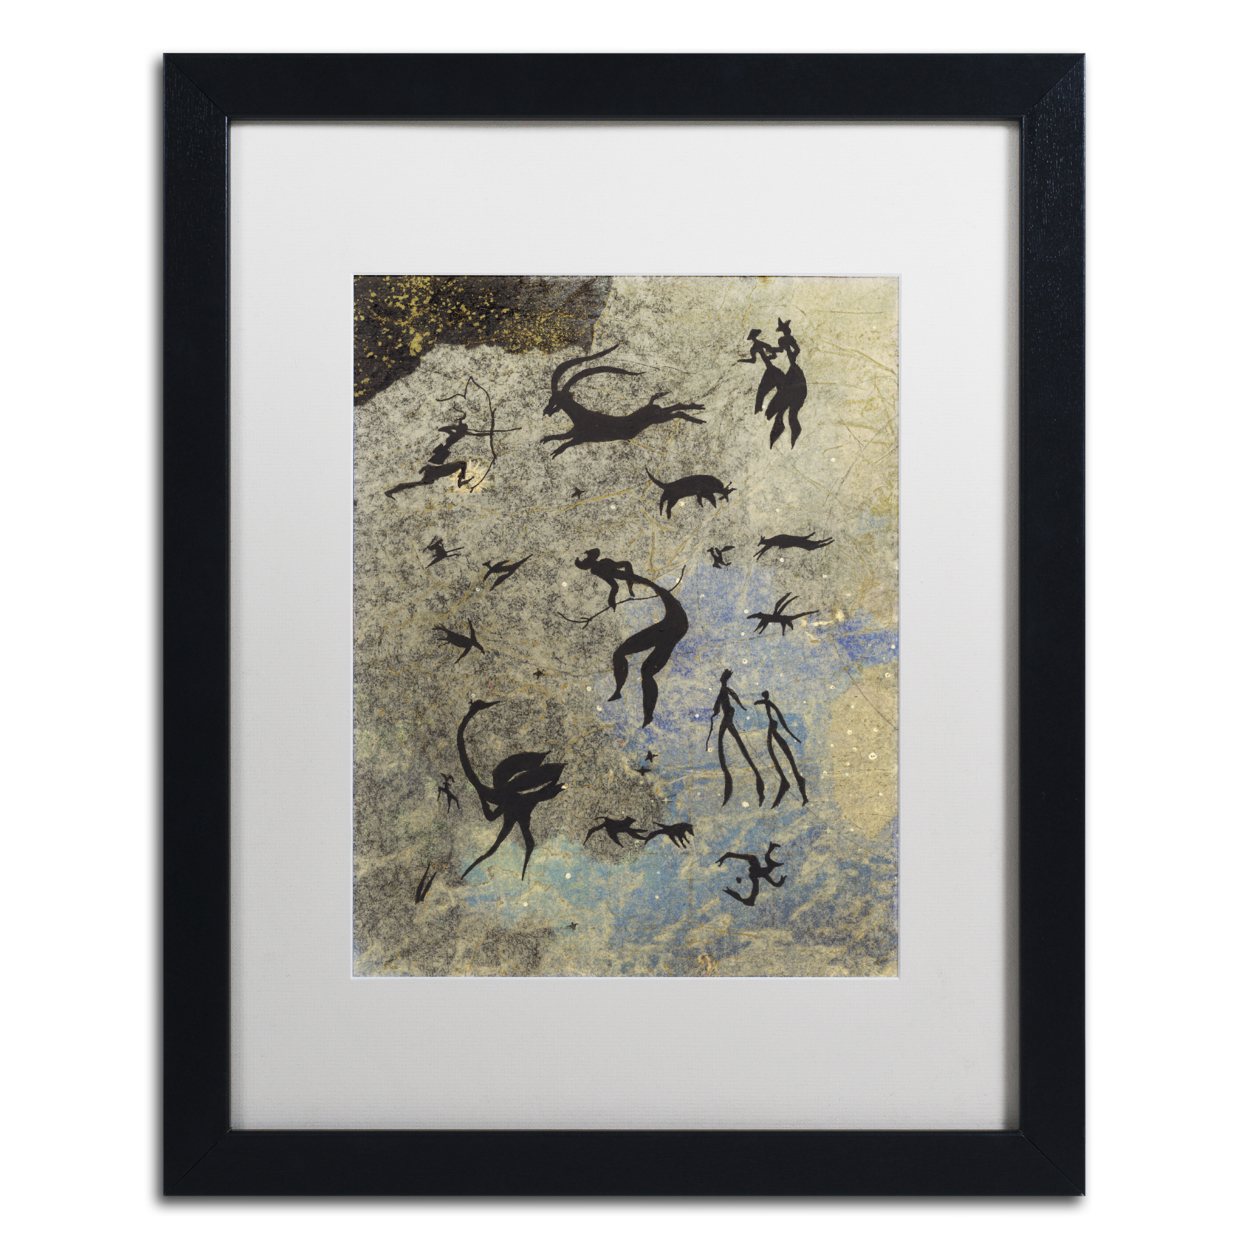 Nick Bantock 'Handmade Petros' Black Wooden Framed Art 18 X 22 Inches